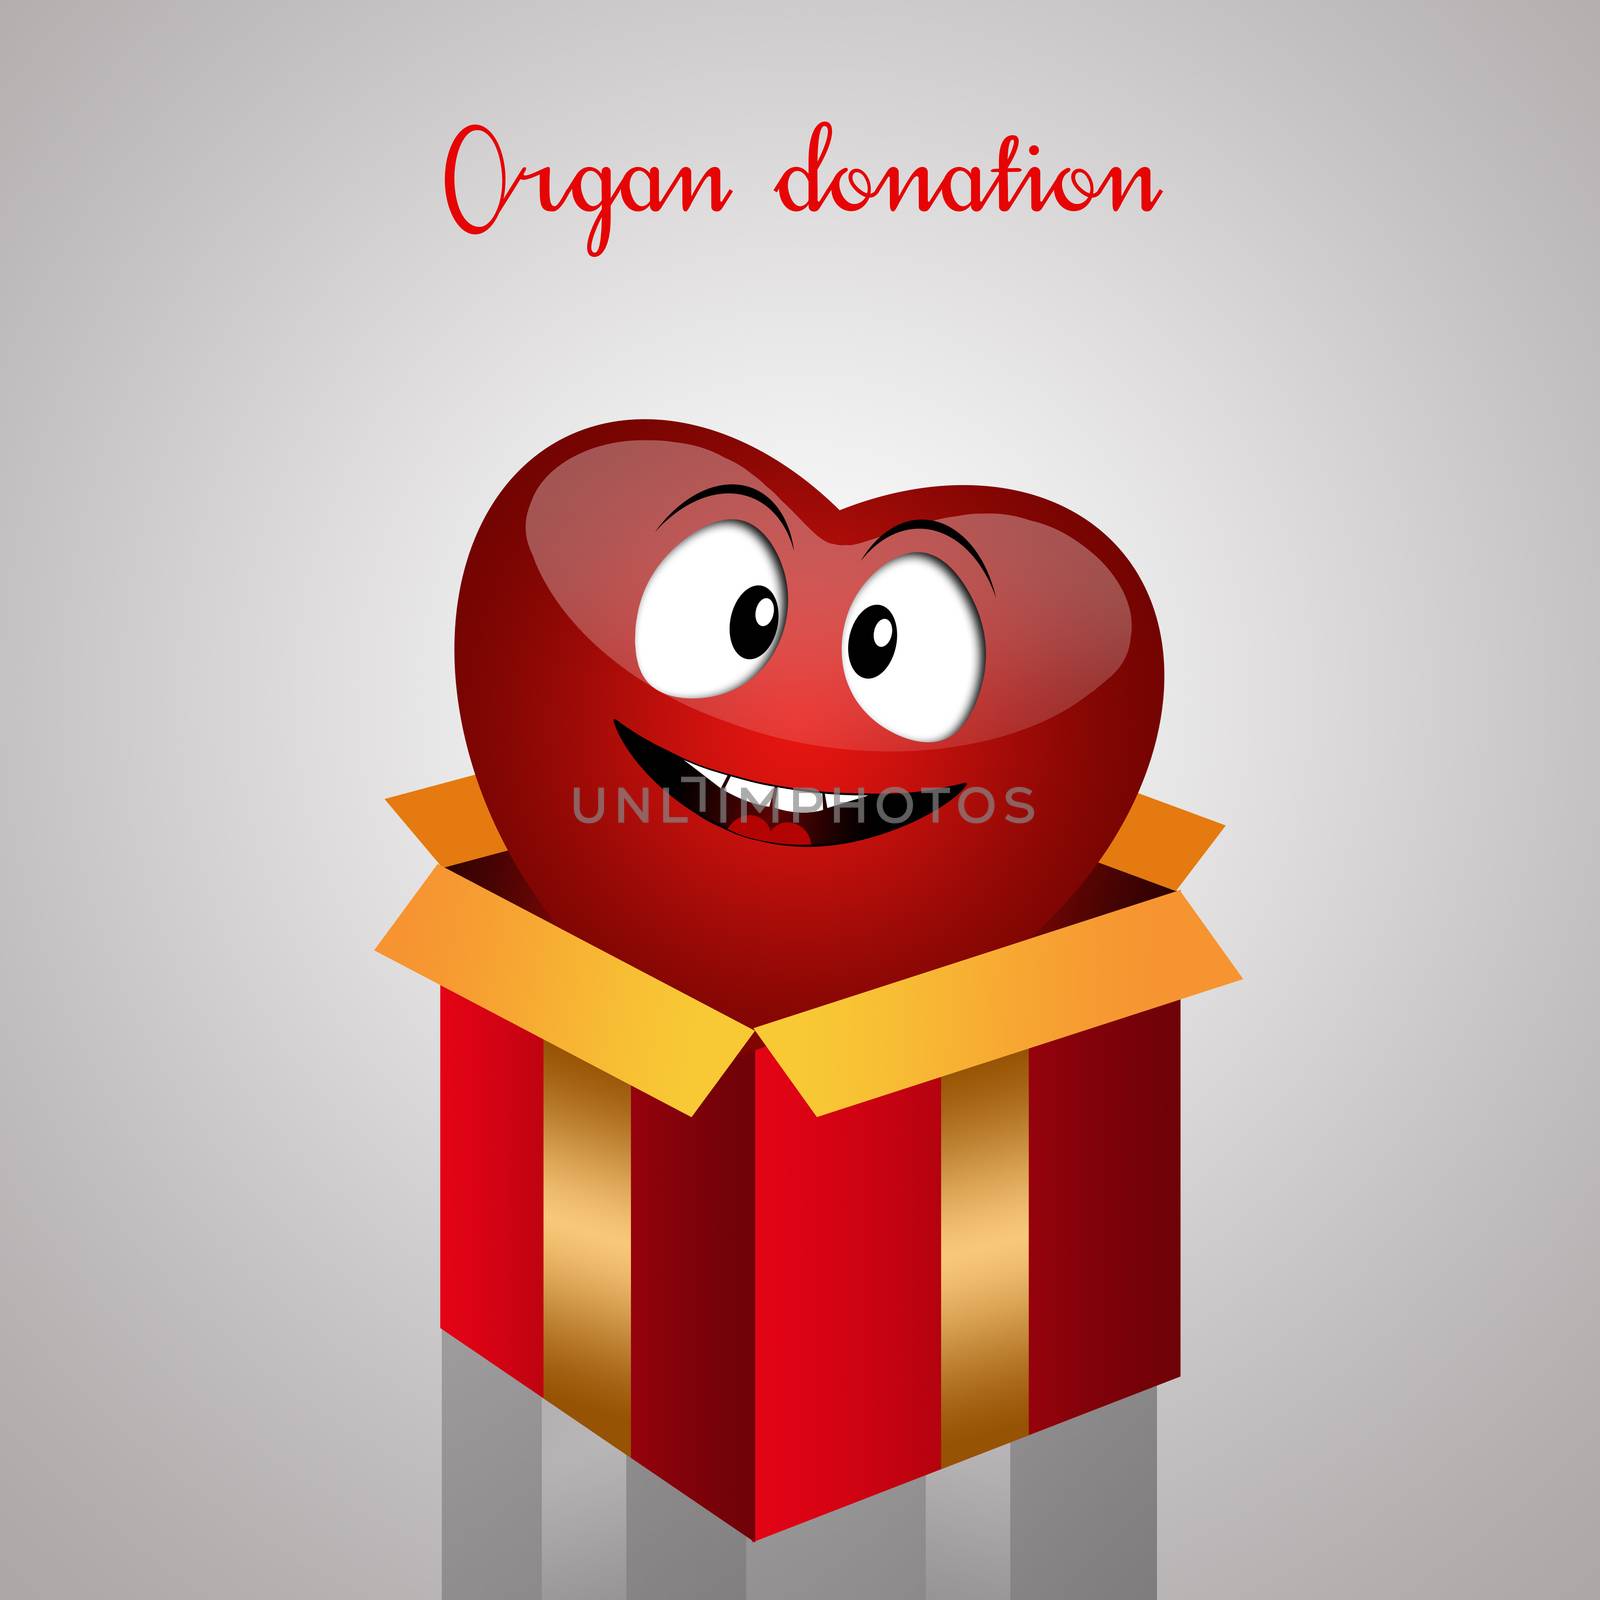 Funny heart for organ donation